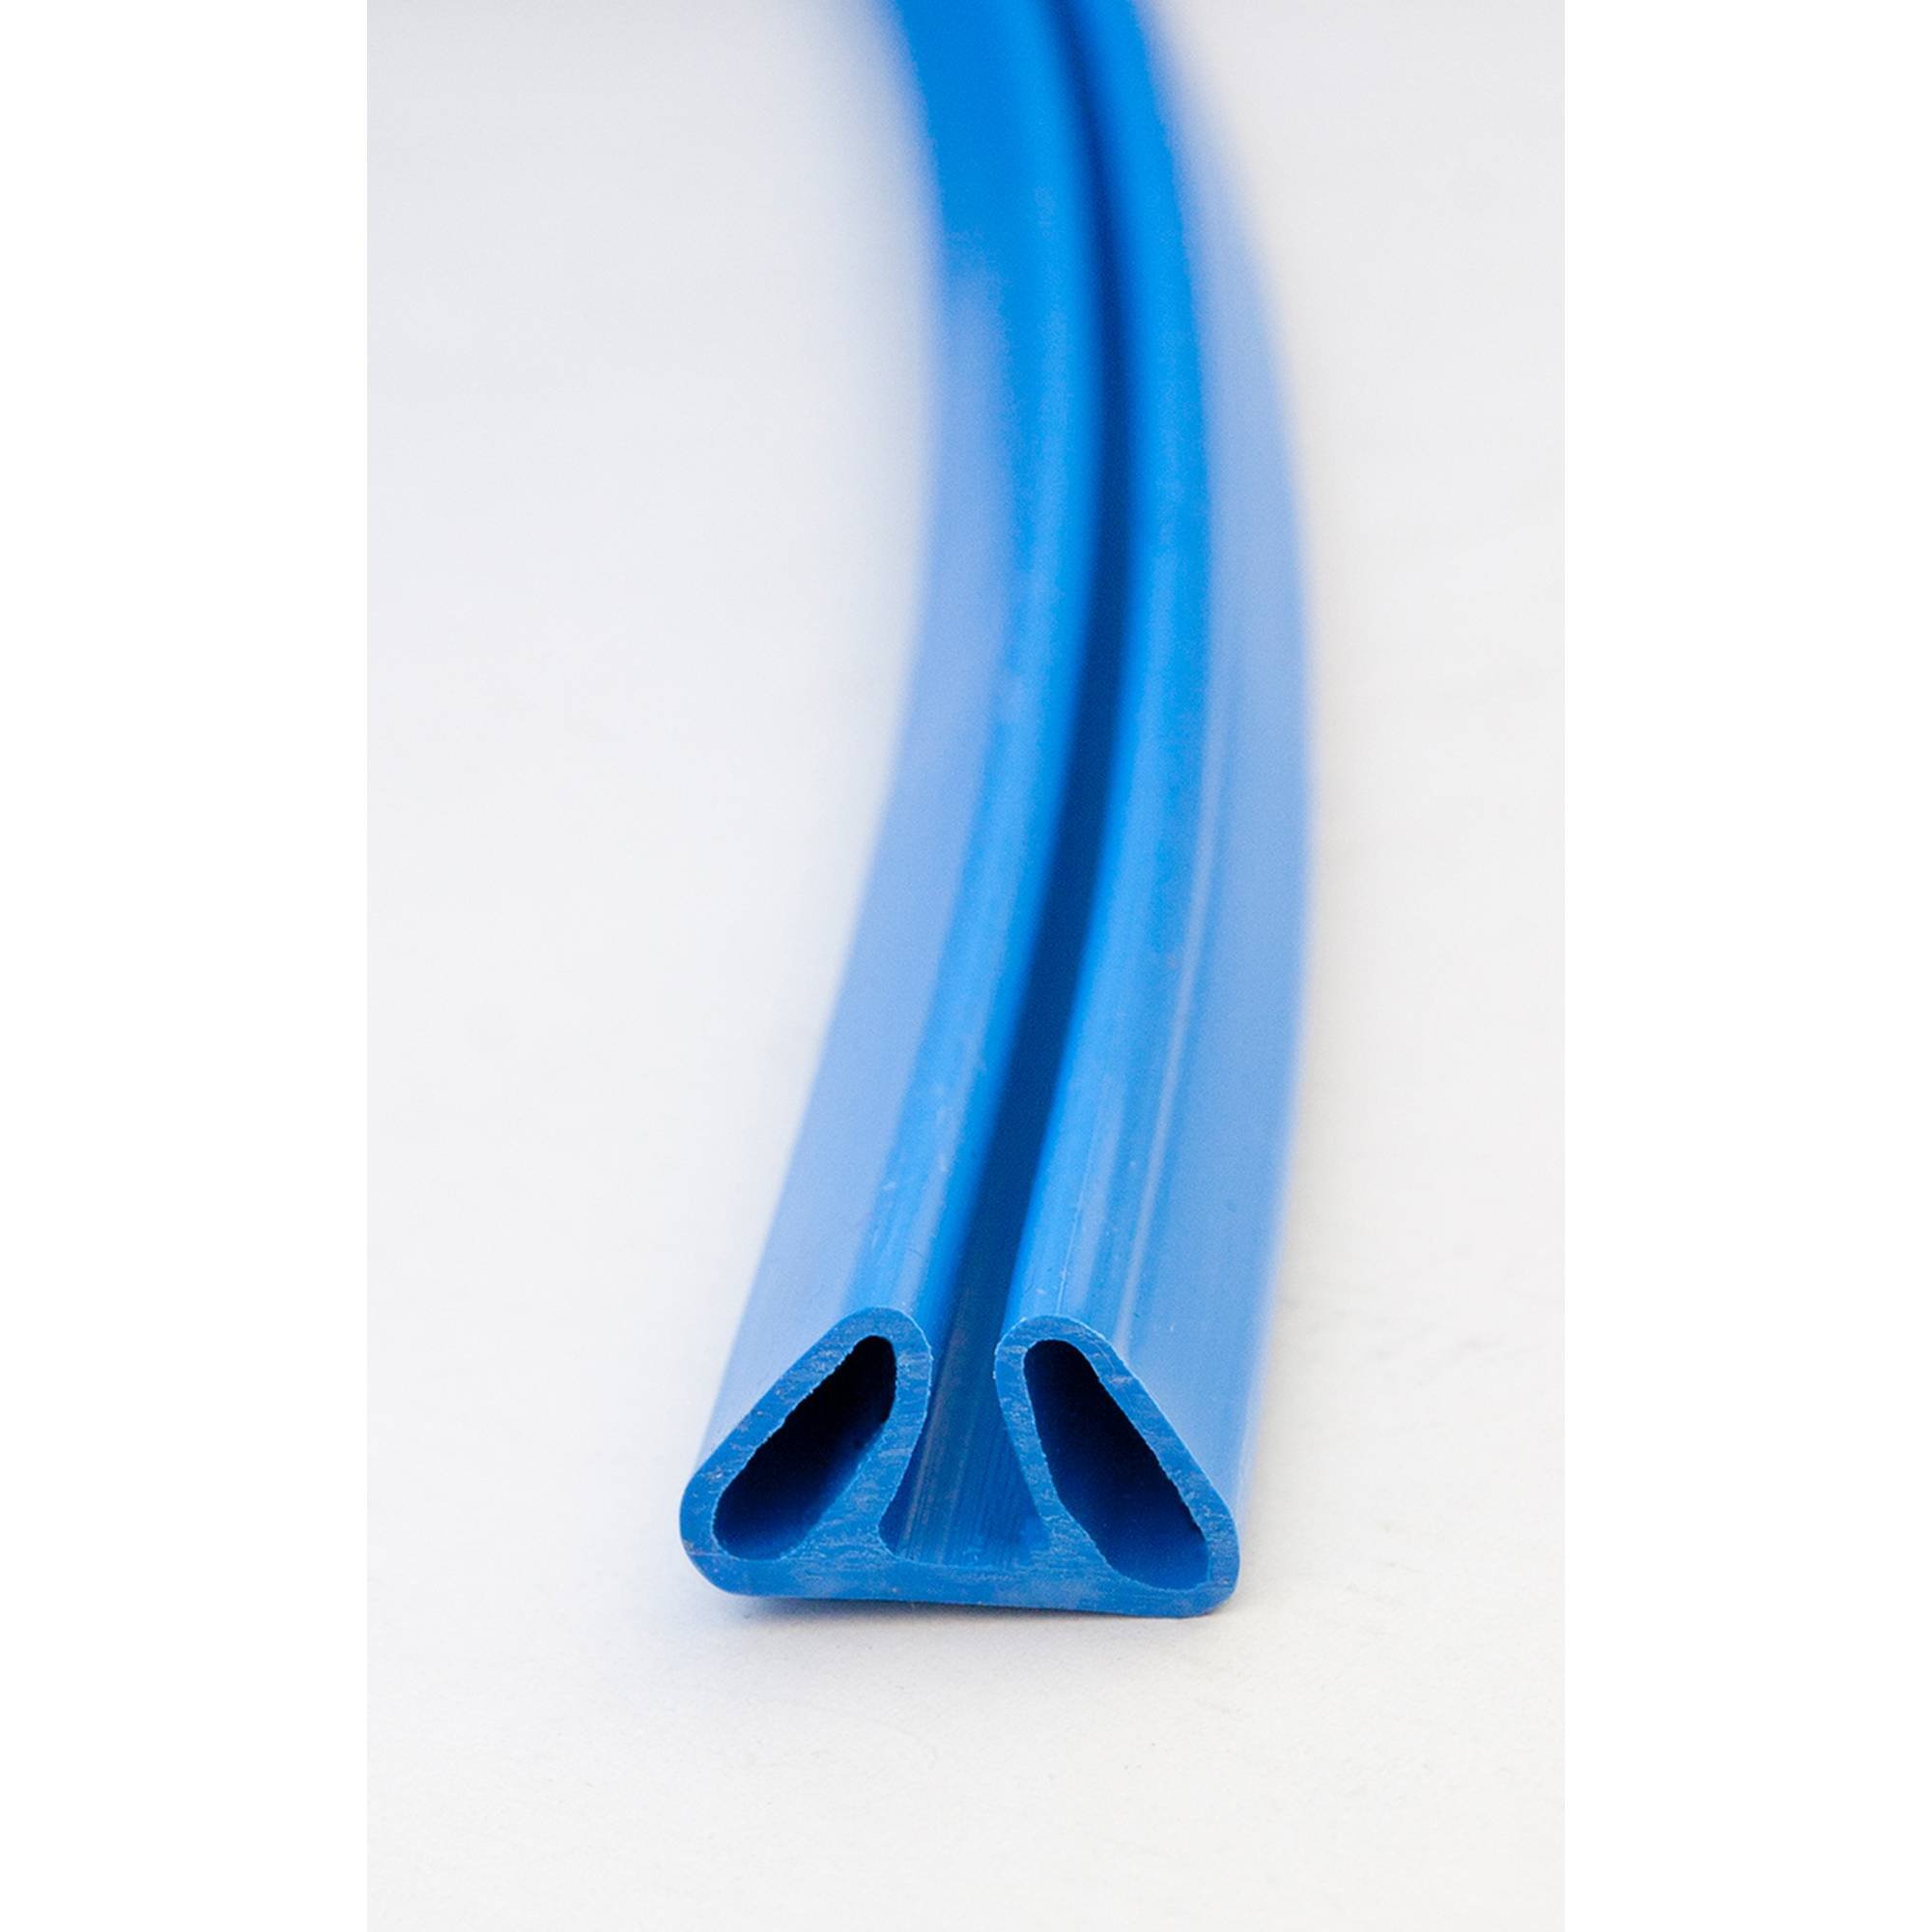 Stahlwandpool oval Exklusiv 525x320x120 cm, Stahl 0,6 mm weiß, Folie 0,6 mm blau, Einhängebiese